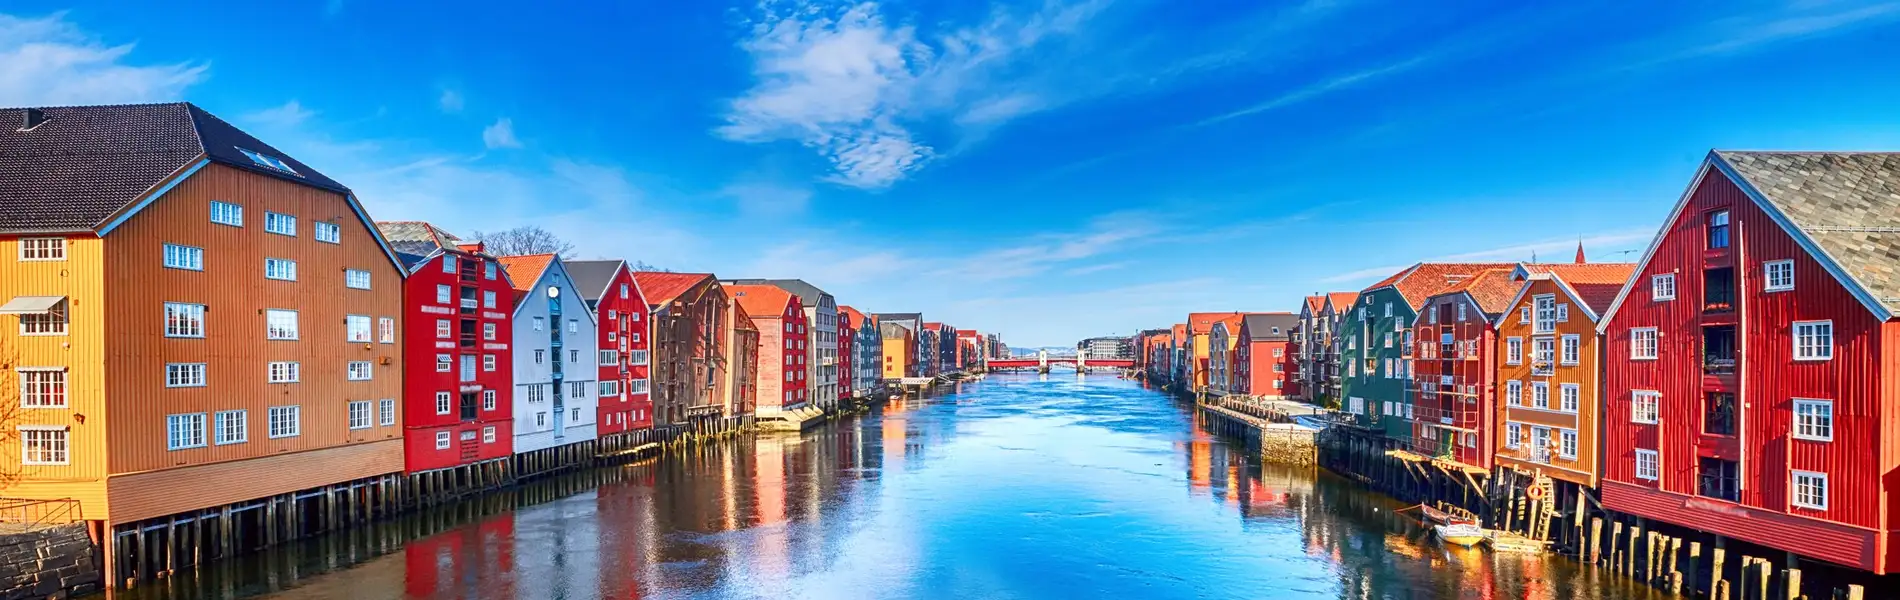 Trondheim (Norway)